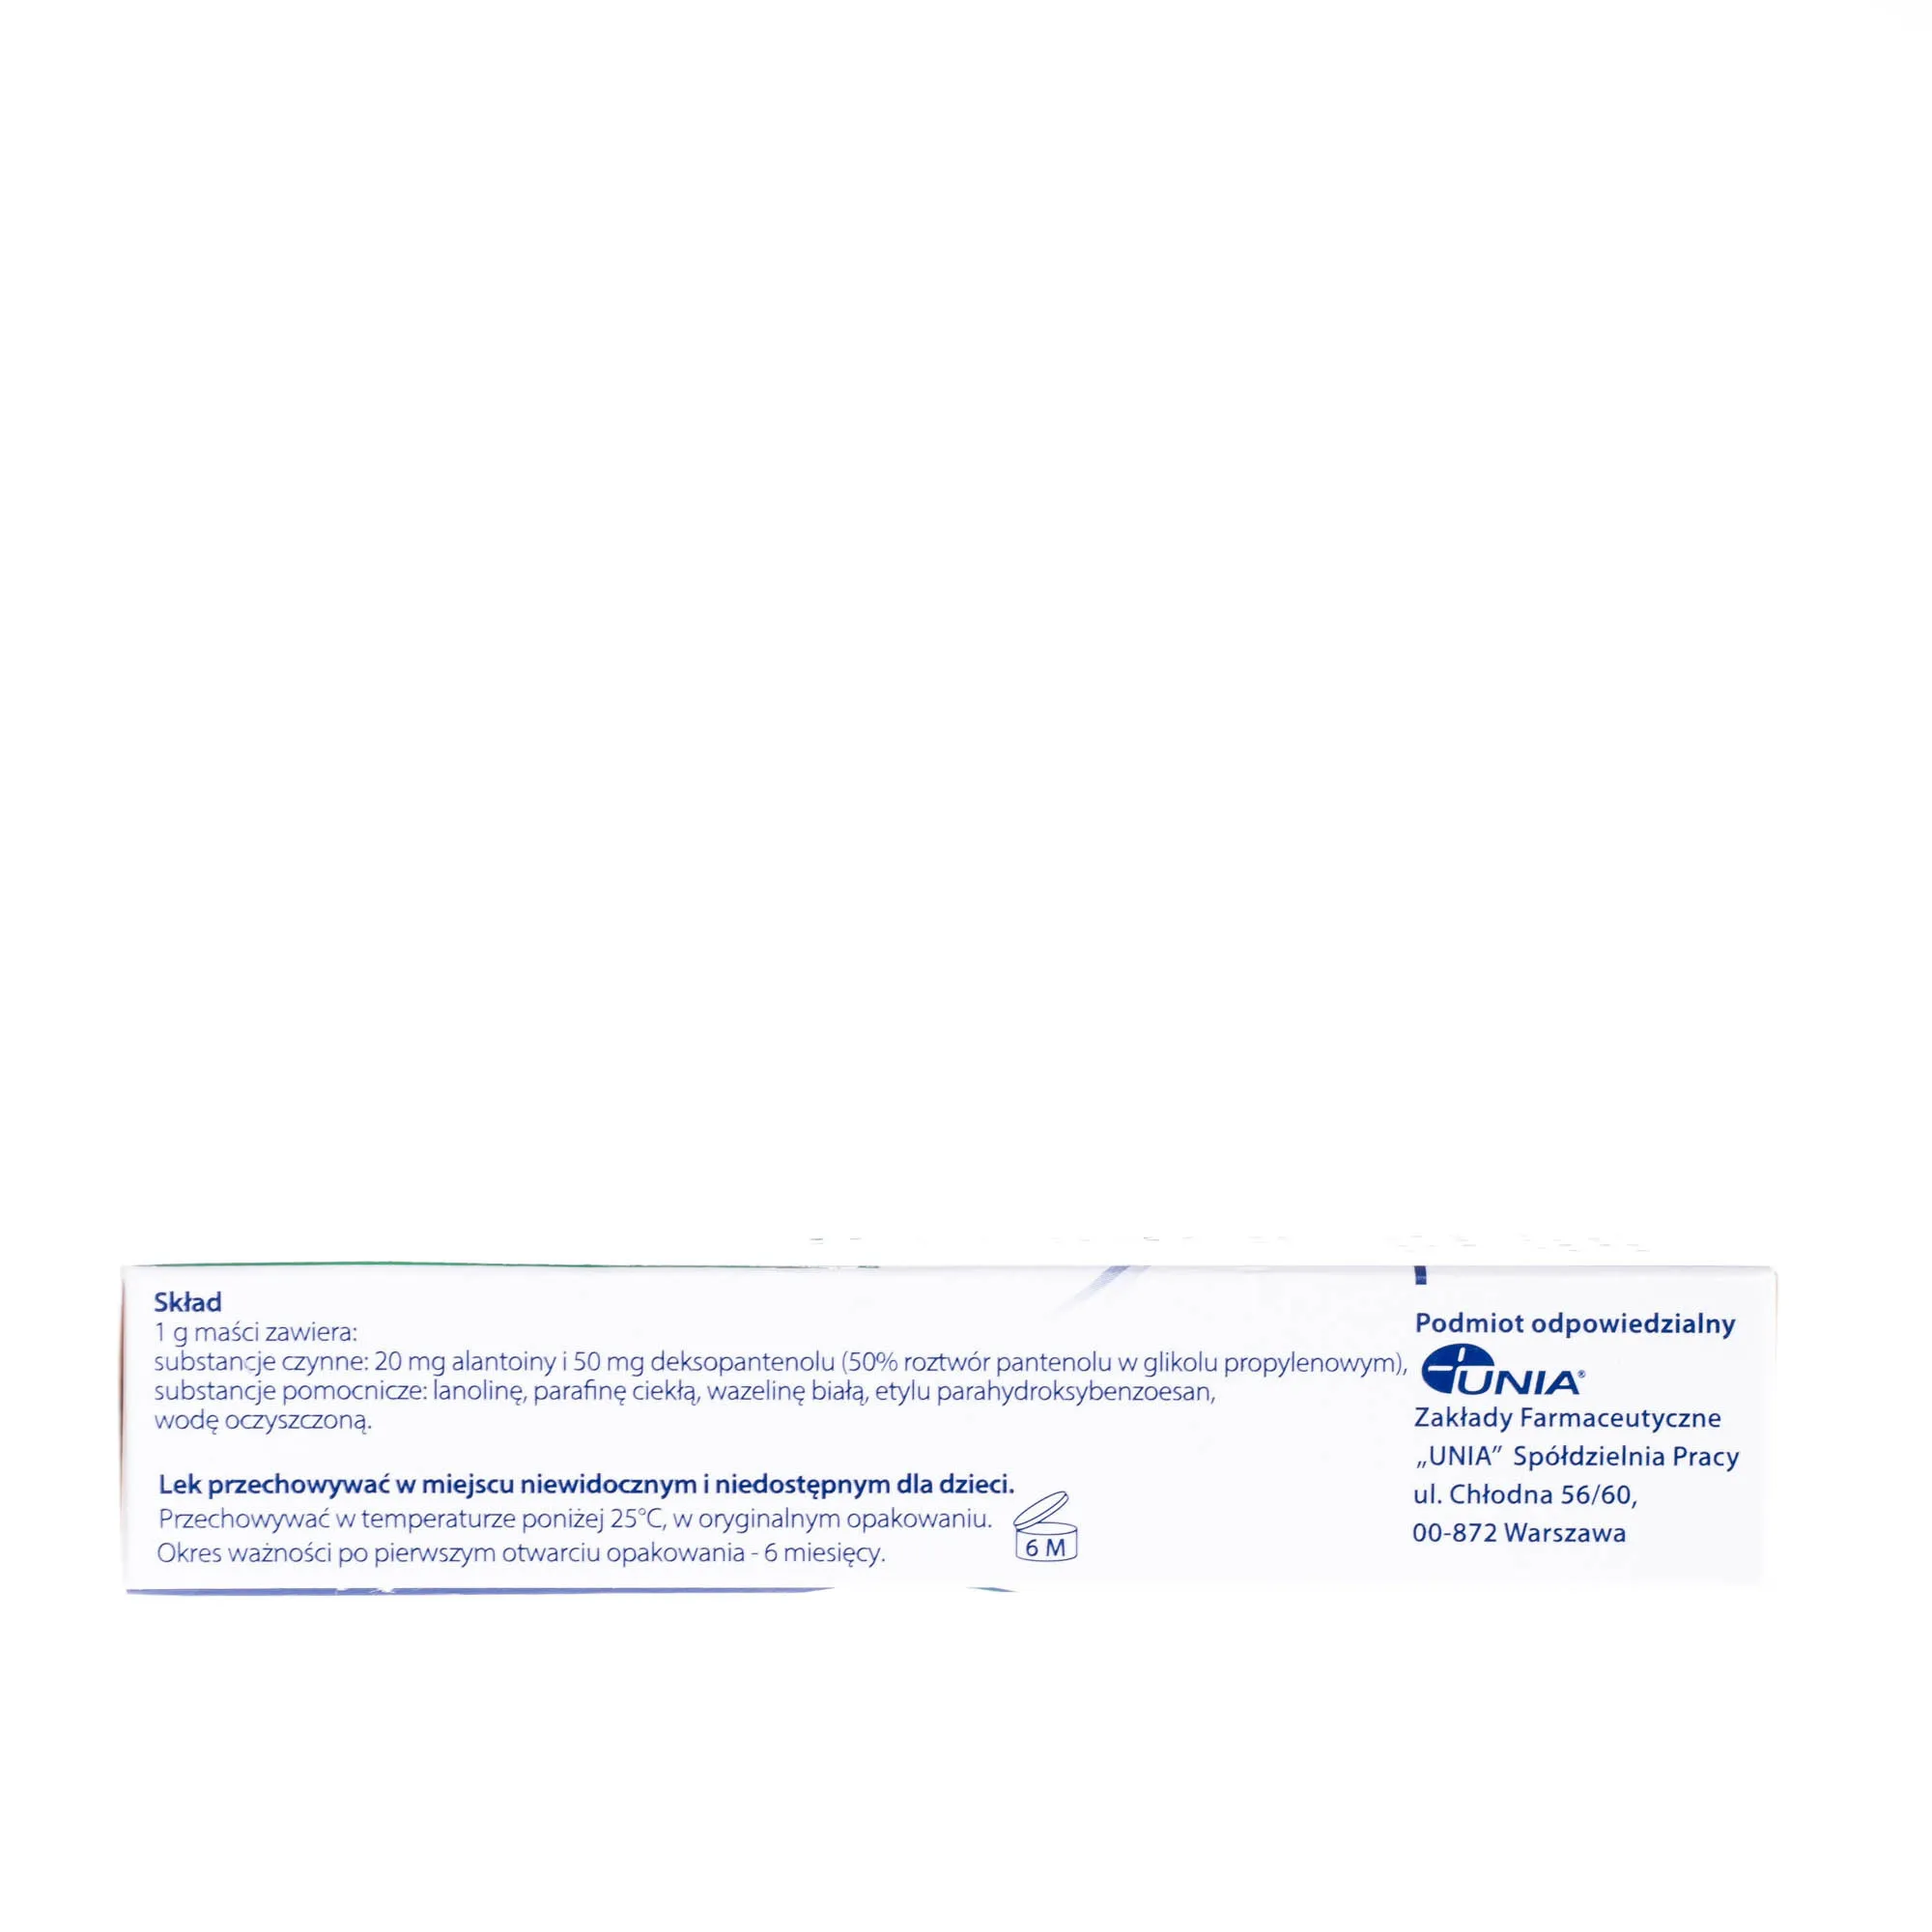 Alantan plus maść ( Allantoinum 20 mg + Dexapanthenolum 50 mg )/g / 30g 